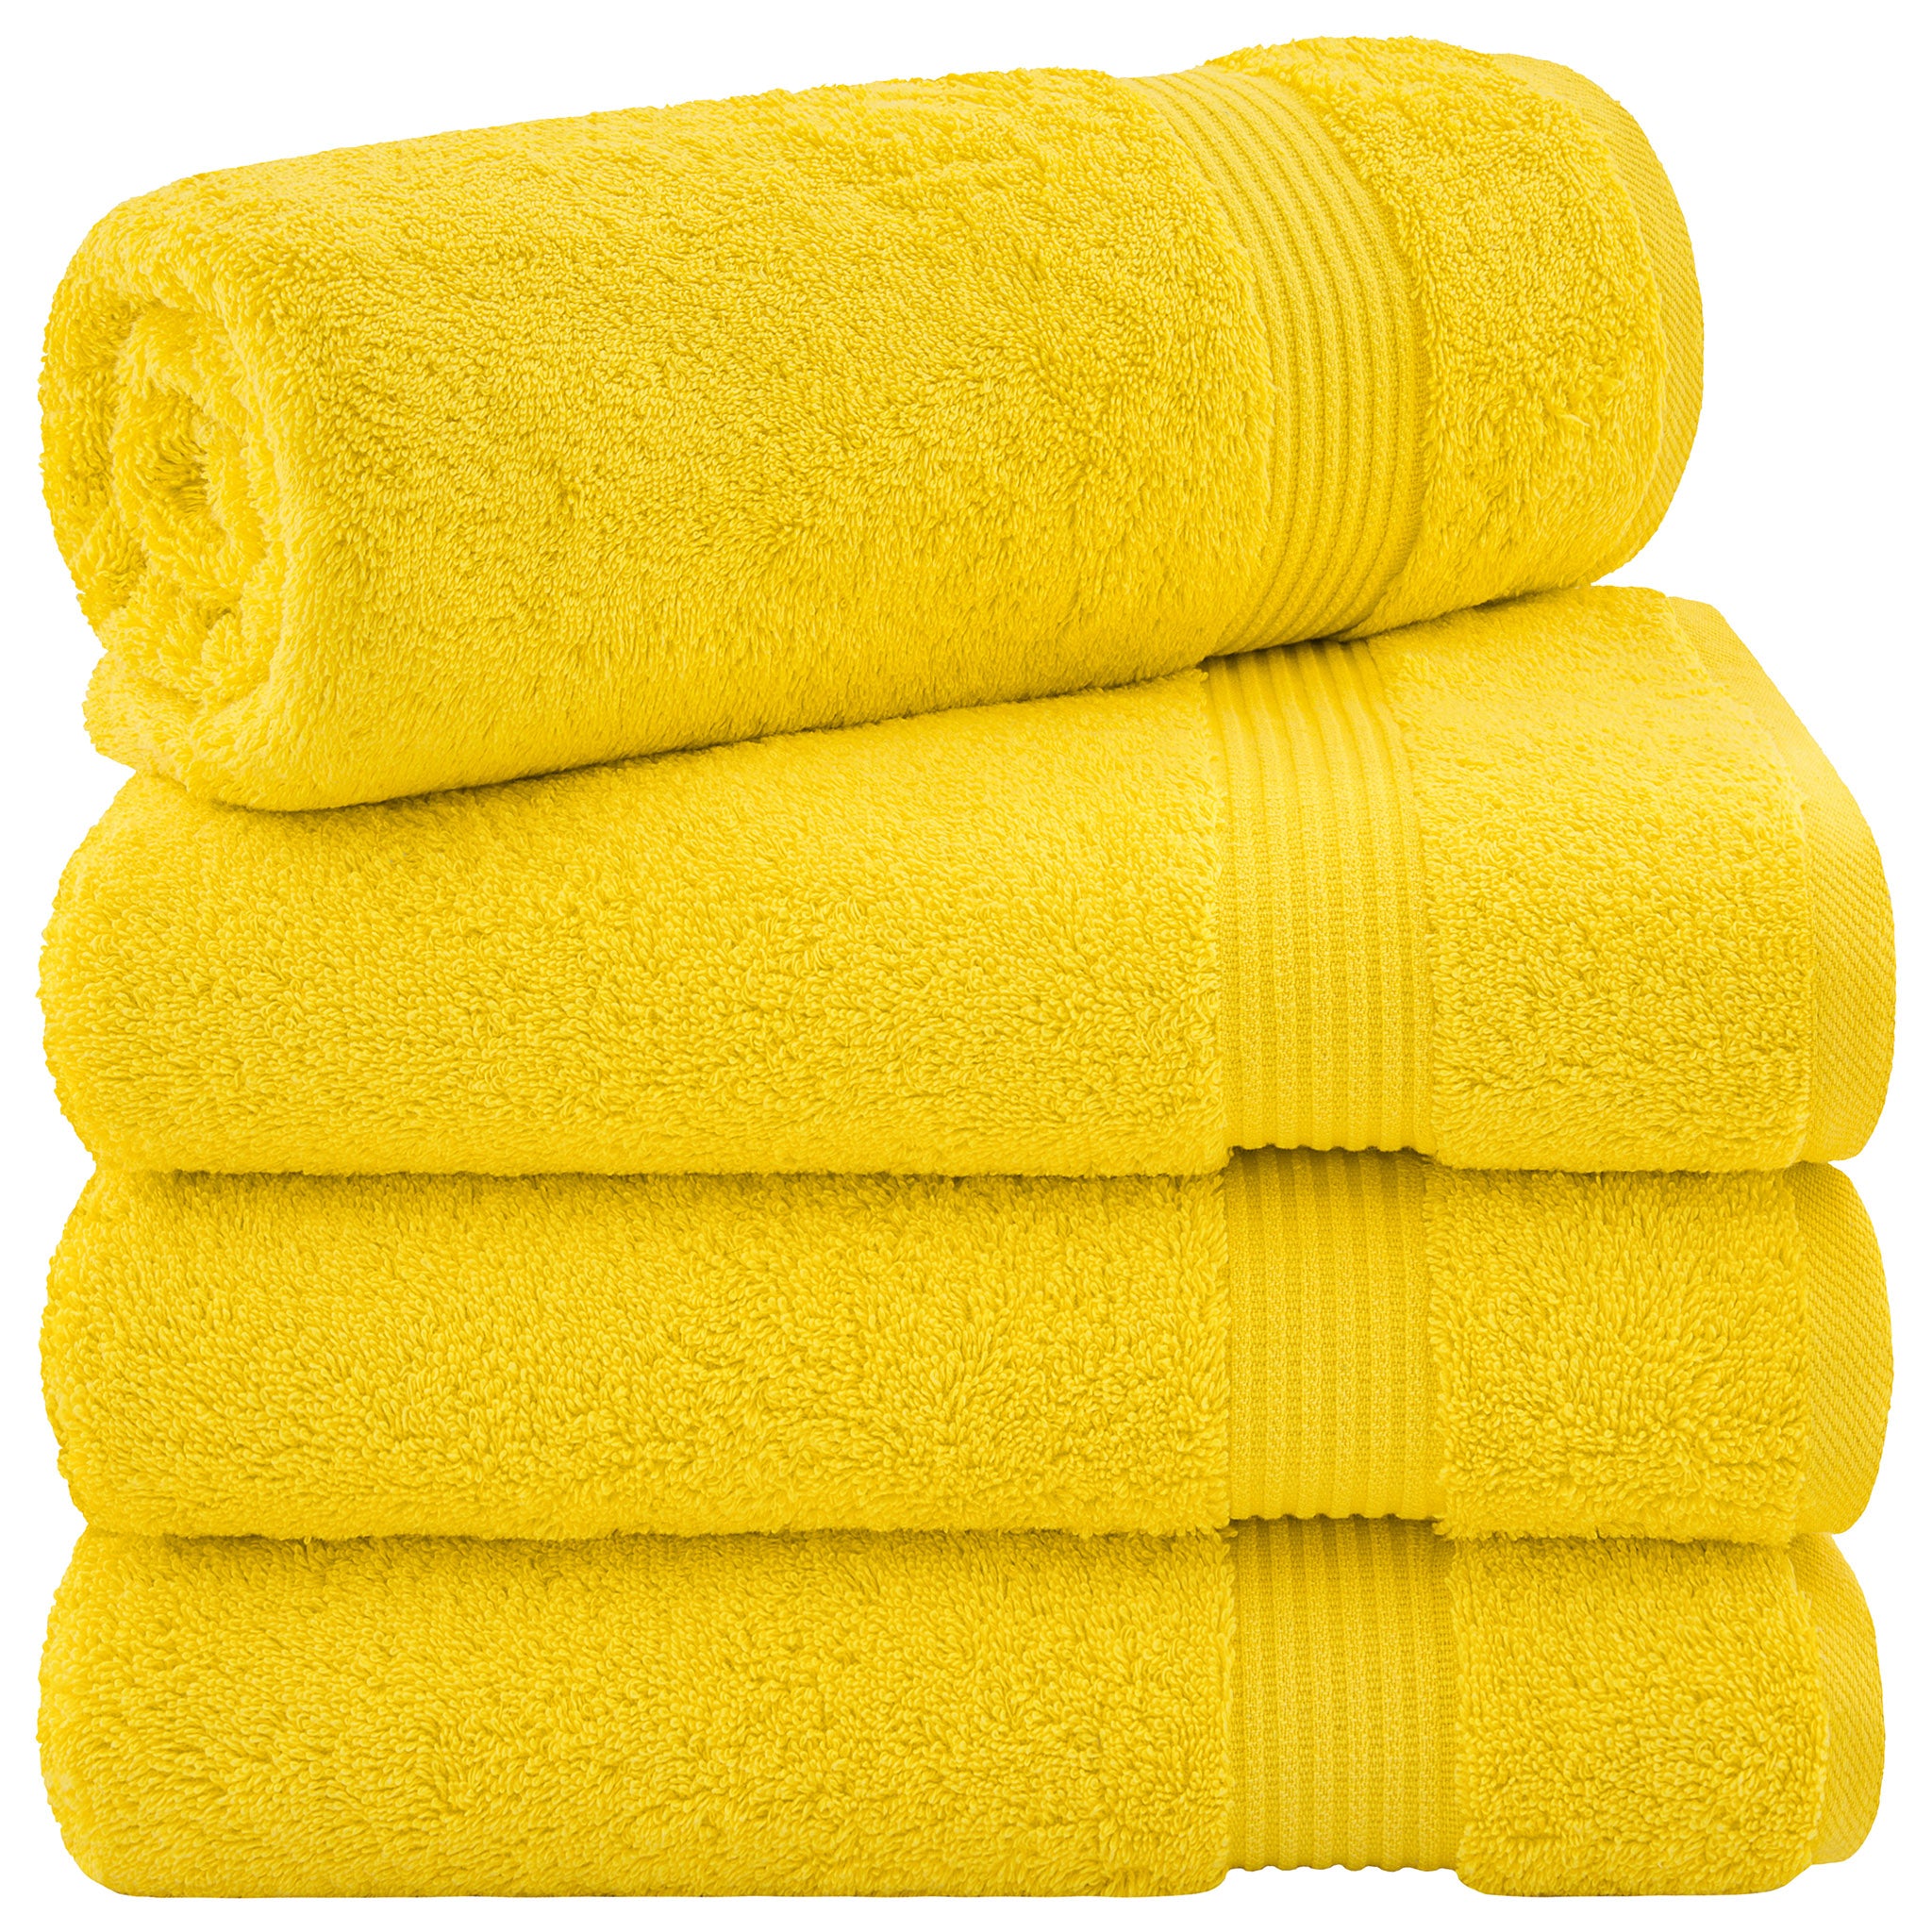 American Soft Linen Bekos 100% Cotton Turkish Towels, 4 Piece Bath Towel Set -turquoise-yellow-01